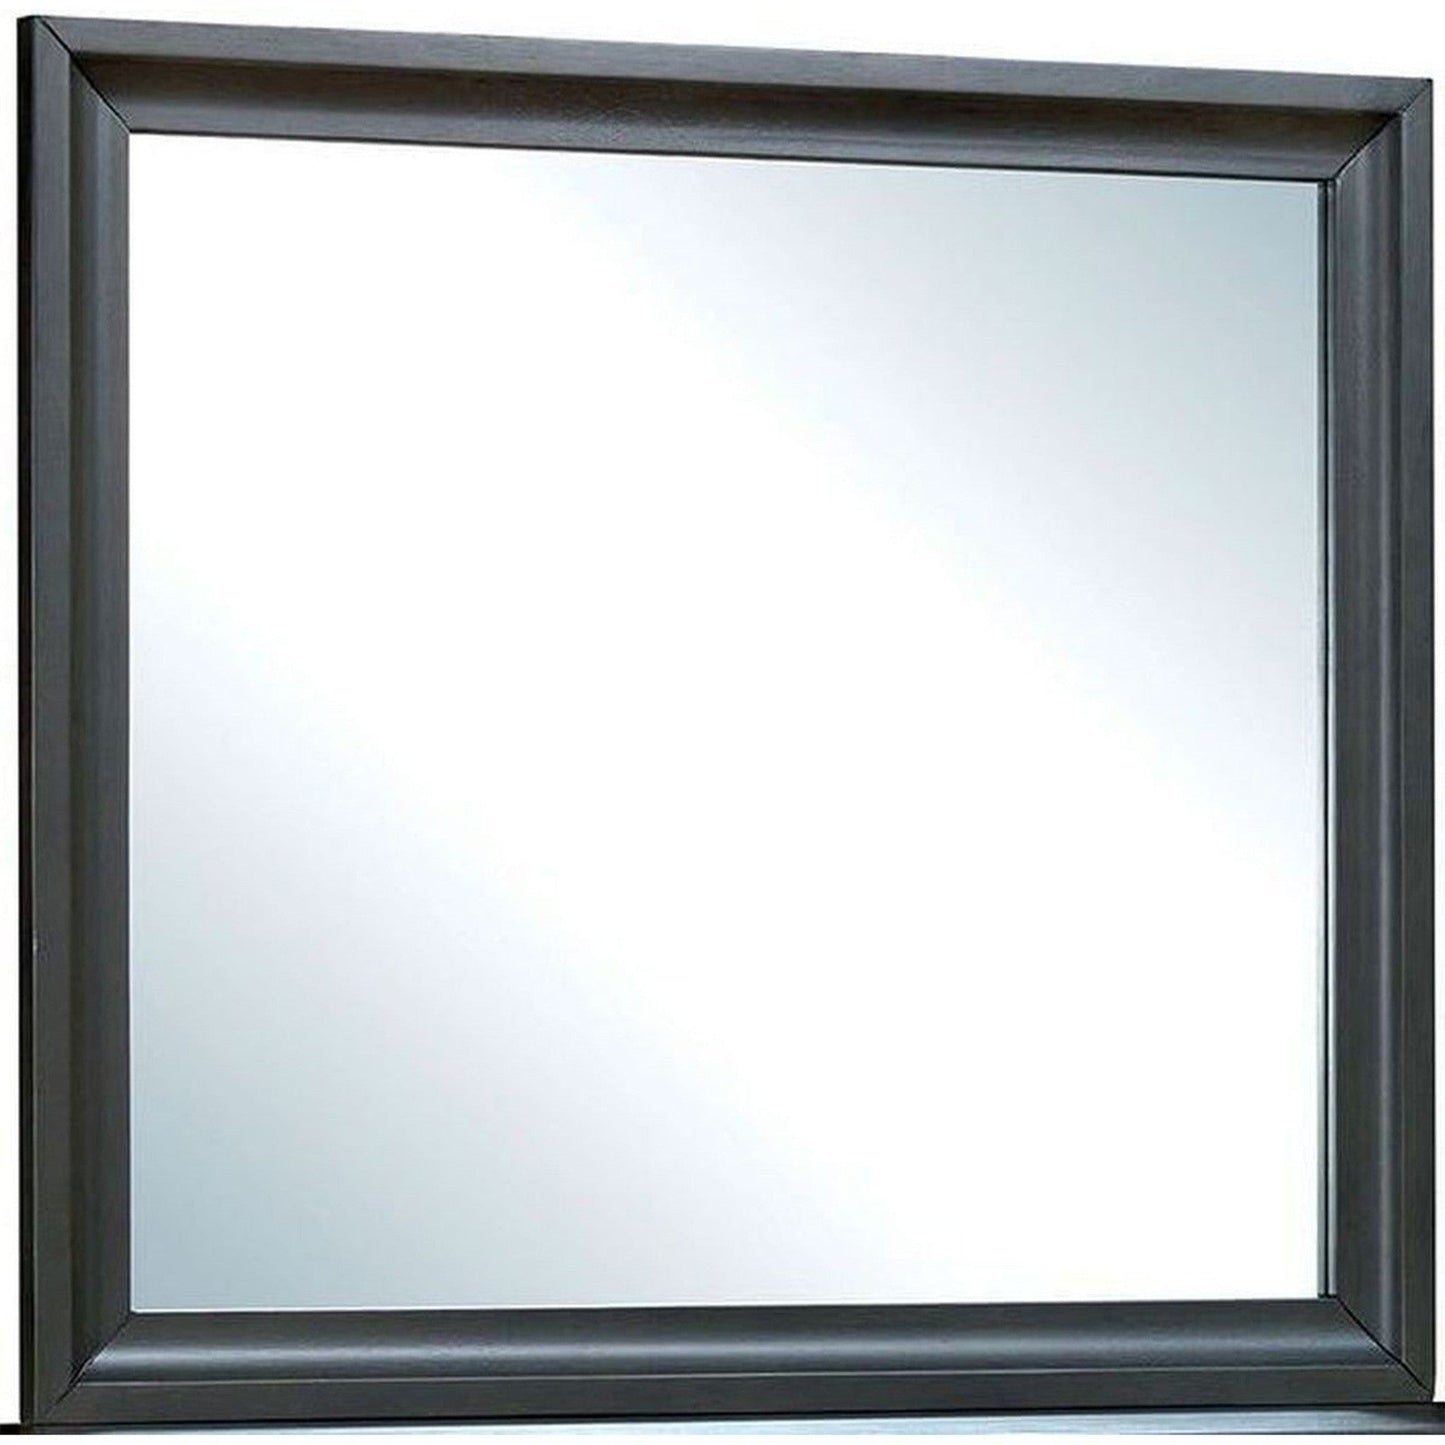 Benzara 32" Antique Gray Transitional Style Wooden Frame Mirror